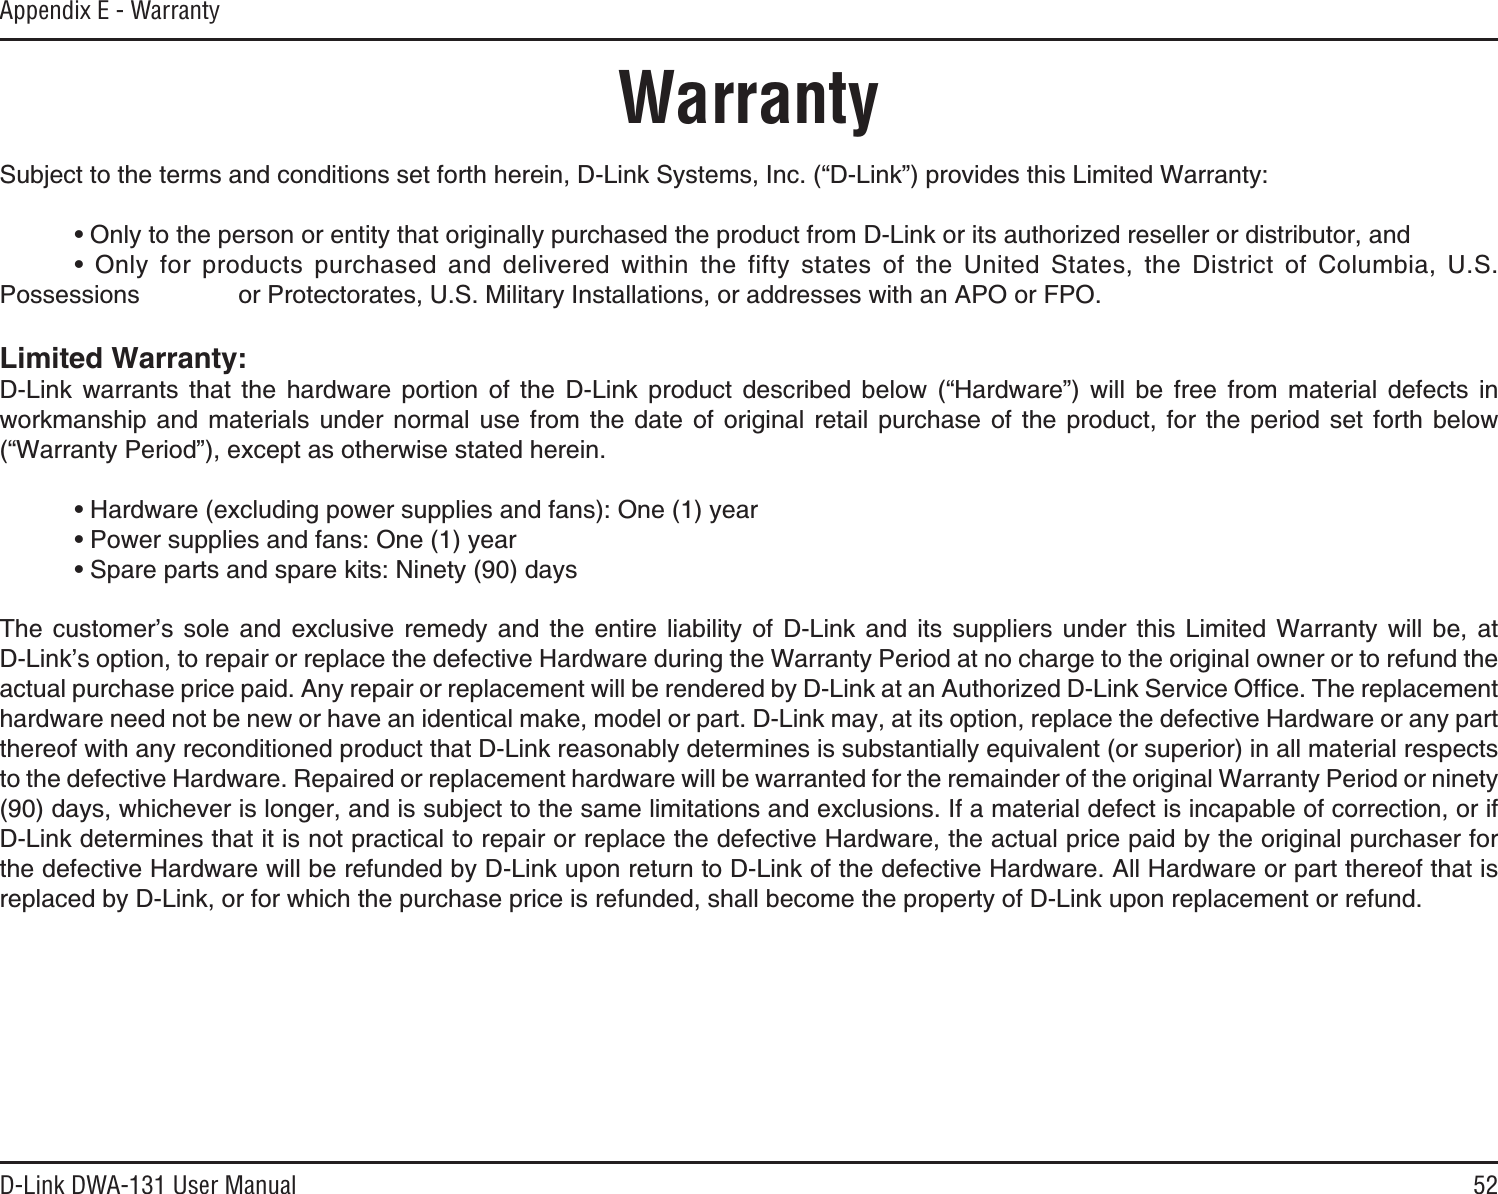 52D-Link DWA-131 User ManualAppendix E - WarrantyWarrantySubject to the terms and conditions set forth herein, D-Link Systems, Inc. (“D-Link”) provides this Limited Warranty: Ŗ1PN[VQVJGRGTUQPQTGPVKV[VJCVQTKIKPCNN[RWTEJCUGFVJGRTQFWEVHTQO&amp;.KPMQTKVUCWVJQTK\GFTGUGNNGTQTFKUVTKDWVQTCPF Ŗ 1PN[ HQT RTQFWEVU RWTEJCUGF CPF FGNKXGTGF YKVJKP VJG HKHV[ UVCVGU QH VJG 7PKVGF 5VCVGU VJG &amp;KUVTKEV QH %QNWODKC 75Possessions      or Protectorates, U.S. Military Installations, or addresses with an APO or FPO..KOKVGF9CTTCPV[D-Link warrants that the hardware portion of the D-Link product described below (“Hardware”) will be free from material defects in workmanship and materials under normal use from the date of original retail purchase of the product, for the period set forth below (“Warranty Period”), except as otherwise stated herein. Ŗ*CTFYCTGGZENWFKPIRQYGTUWRRNKGUCPFHCPU1PG[GCT Ŗ2QYGTUWRRNKGUCPFHCPU1PG[GCT Ŗ5RCTGRCTVUCPFURCTGMKVU0KPGV[FC[U6JG EWUVQOGTŏU UQNG CPF GZENWUKXG TGOGF[ CPF VJG GPVKTG NKCDKNKV[ QH &amp;.KPM CPF KVU UWRRNKGTU WPFGT VJKU .KOKVGF 9CTTCPV[ YKNN DG CV&amp;.KPMŏUQRVKQPVQTGRCKTQTTGRNCEGVJGFGHGEVKXG*CTFYCTGFWTKPIVJG9CTTCPV[2GTKQFCVPQEJCTIGVQVJGQTKIKPCNQYPGTQTVQTGHWPFVJGCEVWCNRWTEJCUGRTKEGRCKF#P[TGRCKTQTTGRNCEGOGPVYKNNDGTGPFGTGFD[&amp;.KPMCVCP#WVJQTK\GF&amp;.KPM5GTXKEG1HſEG6JGTGRNCEGOGPVhardware need not be new or have an identical make, model or part. D-Link may, at its option, replace the defective Hardware or any part thereof with any reconditioned product that D-Link reasonably determines is substantially equivalent (or superior) in all material respects to the defective Hardware. Repaired or replacement hardware will be warranted for the remainder of the original Warranty Period or ninety (90) days, whichever is longer, and is subject to the same limitations and exclusions. If a material defect is incapable of correction, or if D-Link determines that it is not practical to repair or replace the defective Hardware, the actual price paid by the original purchaser for the defective Hardware will be refunded by D-Link upon return to D-Link of the defective Hardware. All Hardware or part thereof that is replaced by D-Link, or for which the purchase price is refunded, shall become the property of D-Link upon replacement or refund.